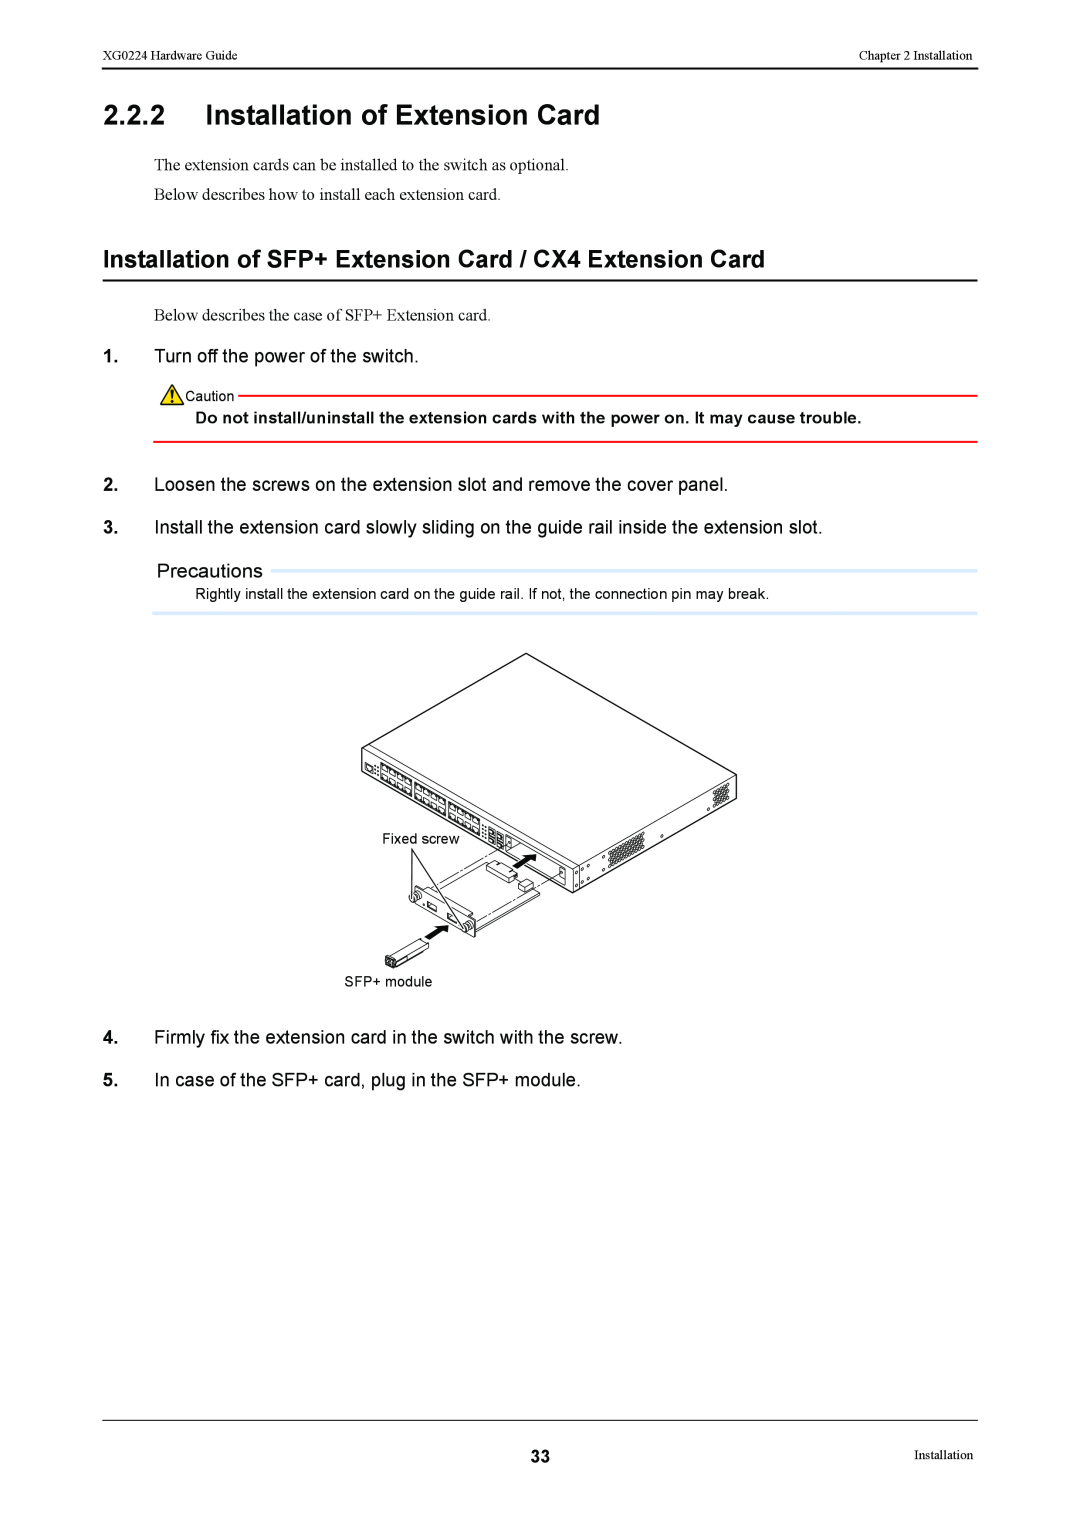 Fujitsu XG0224 manual Installation of Extension Card, Installation of SFP+ Extension Card / CX4 Extension Card 